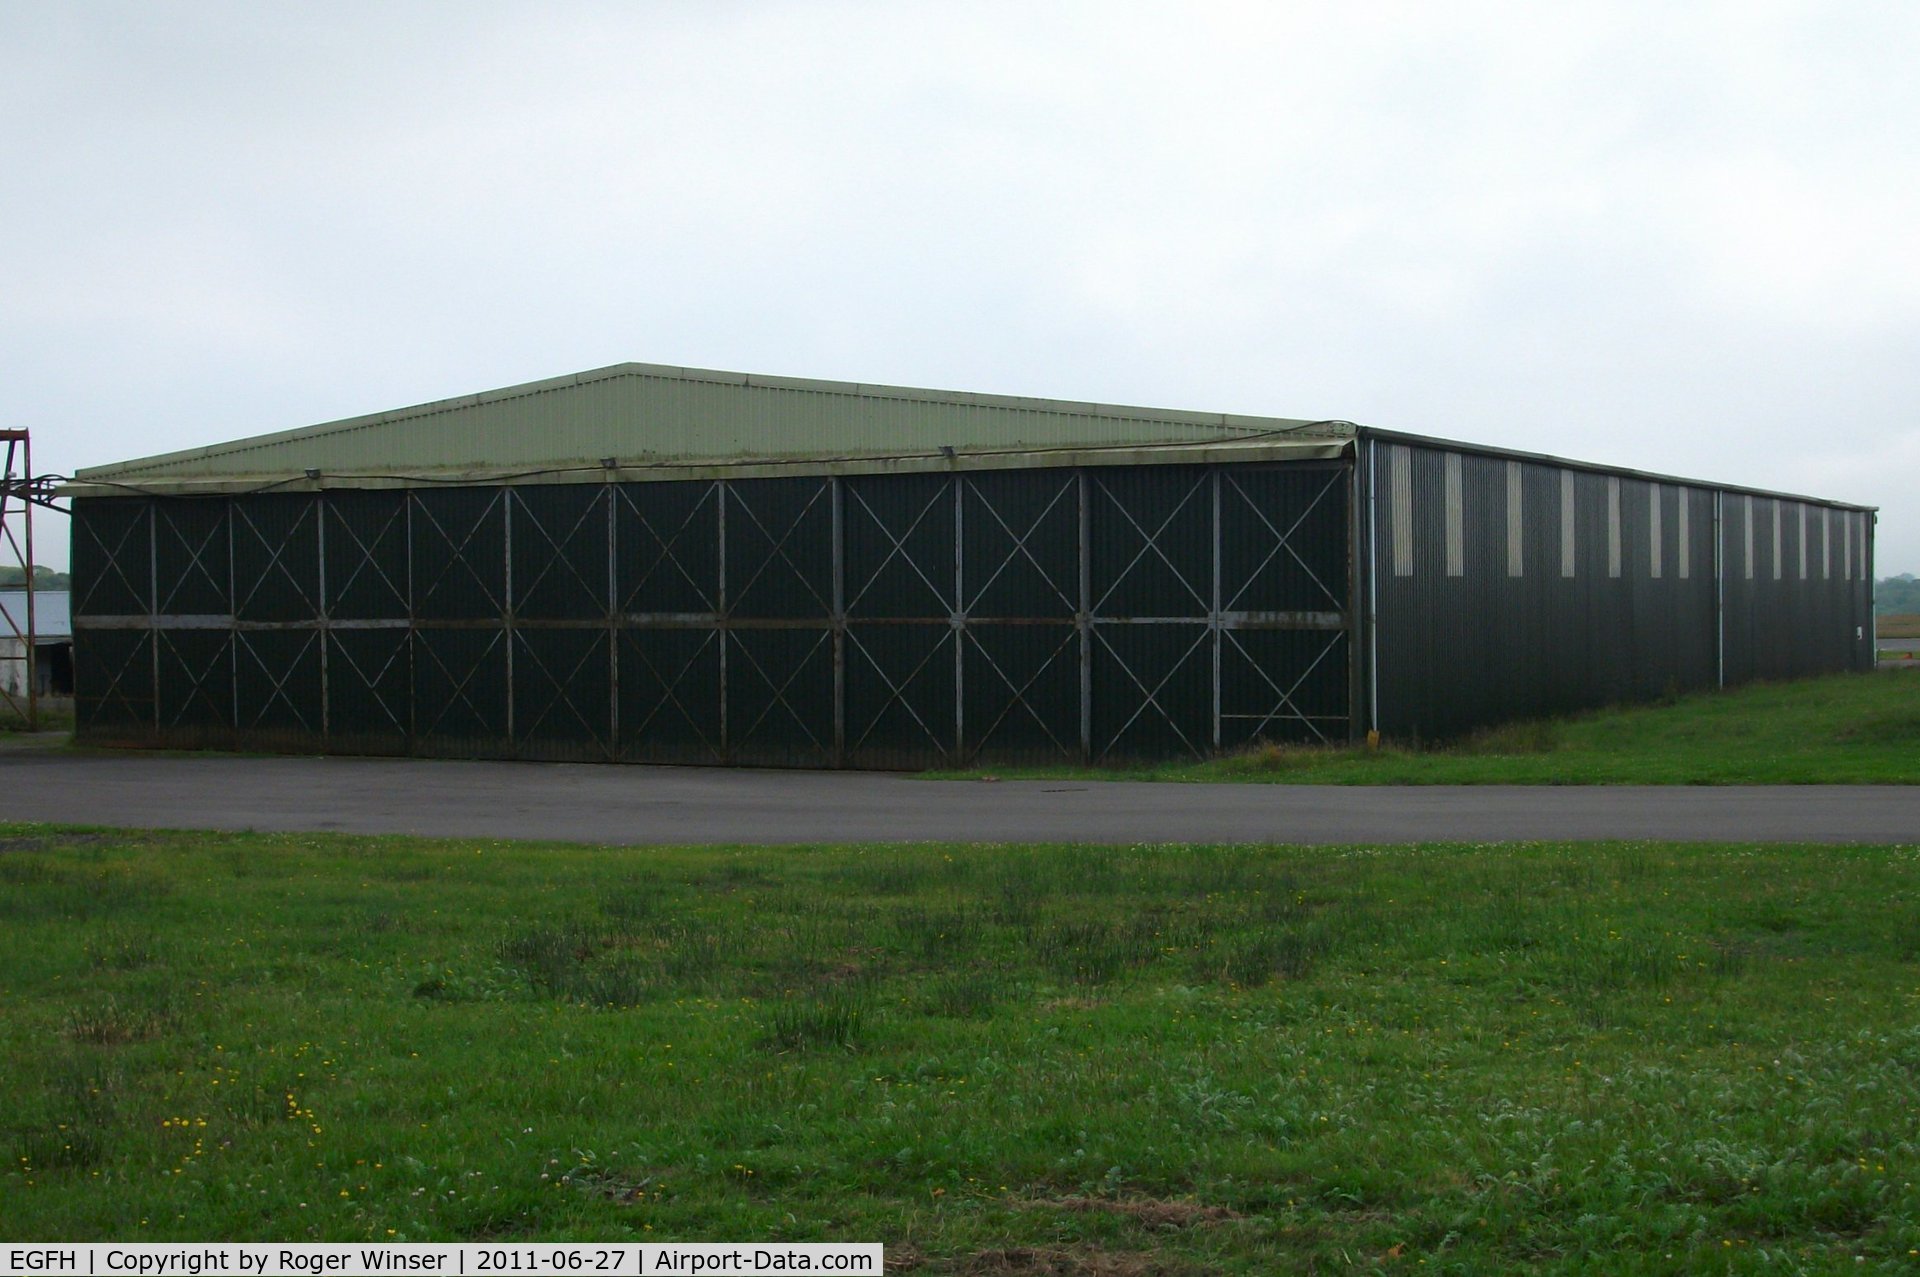 Swansea Airport, Swansea, Wales United Kingdom (EGFH) - Sole remaining Bellman hangar (Hangar 2). Erected by the RAF in 1941.